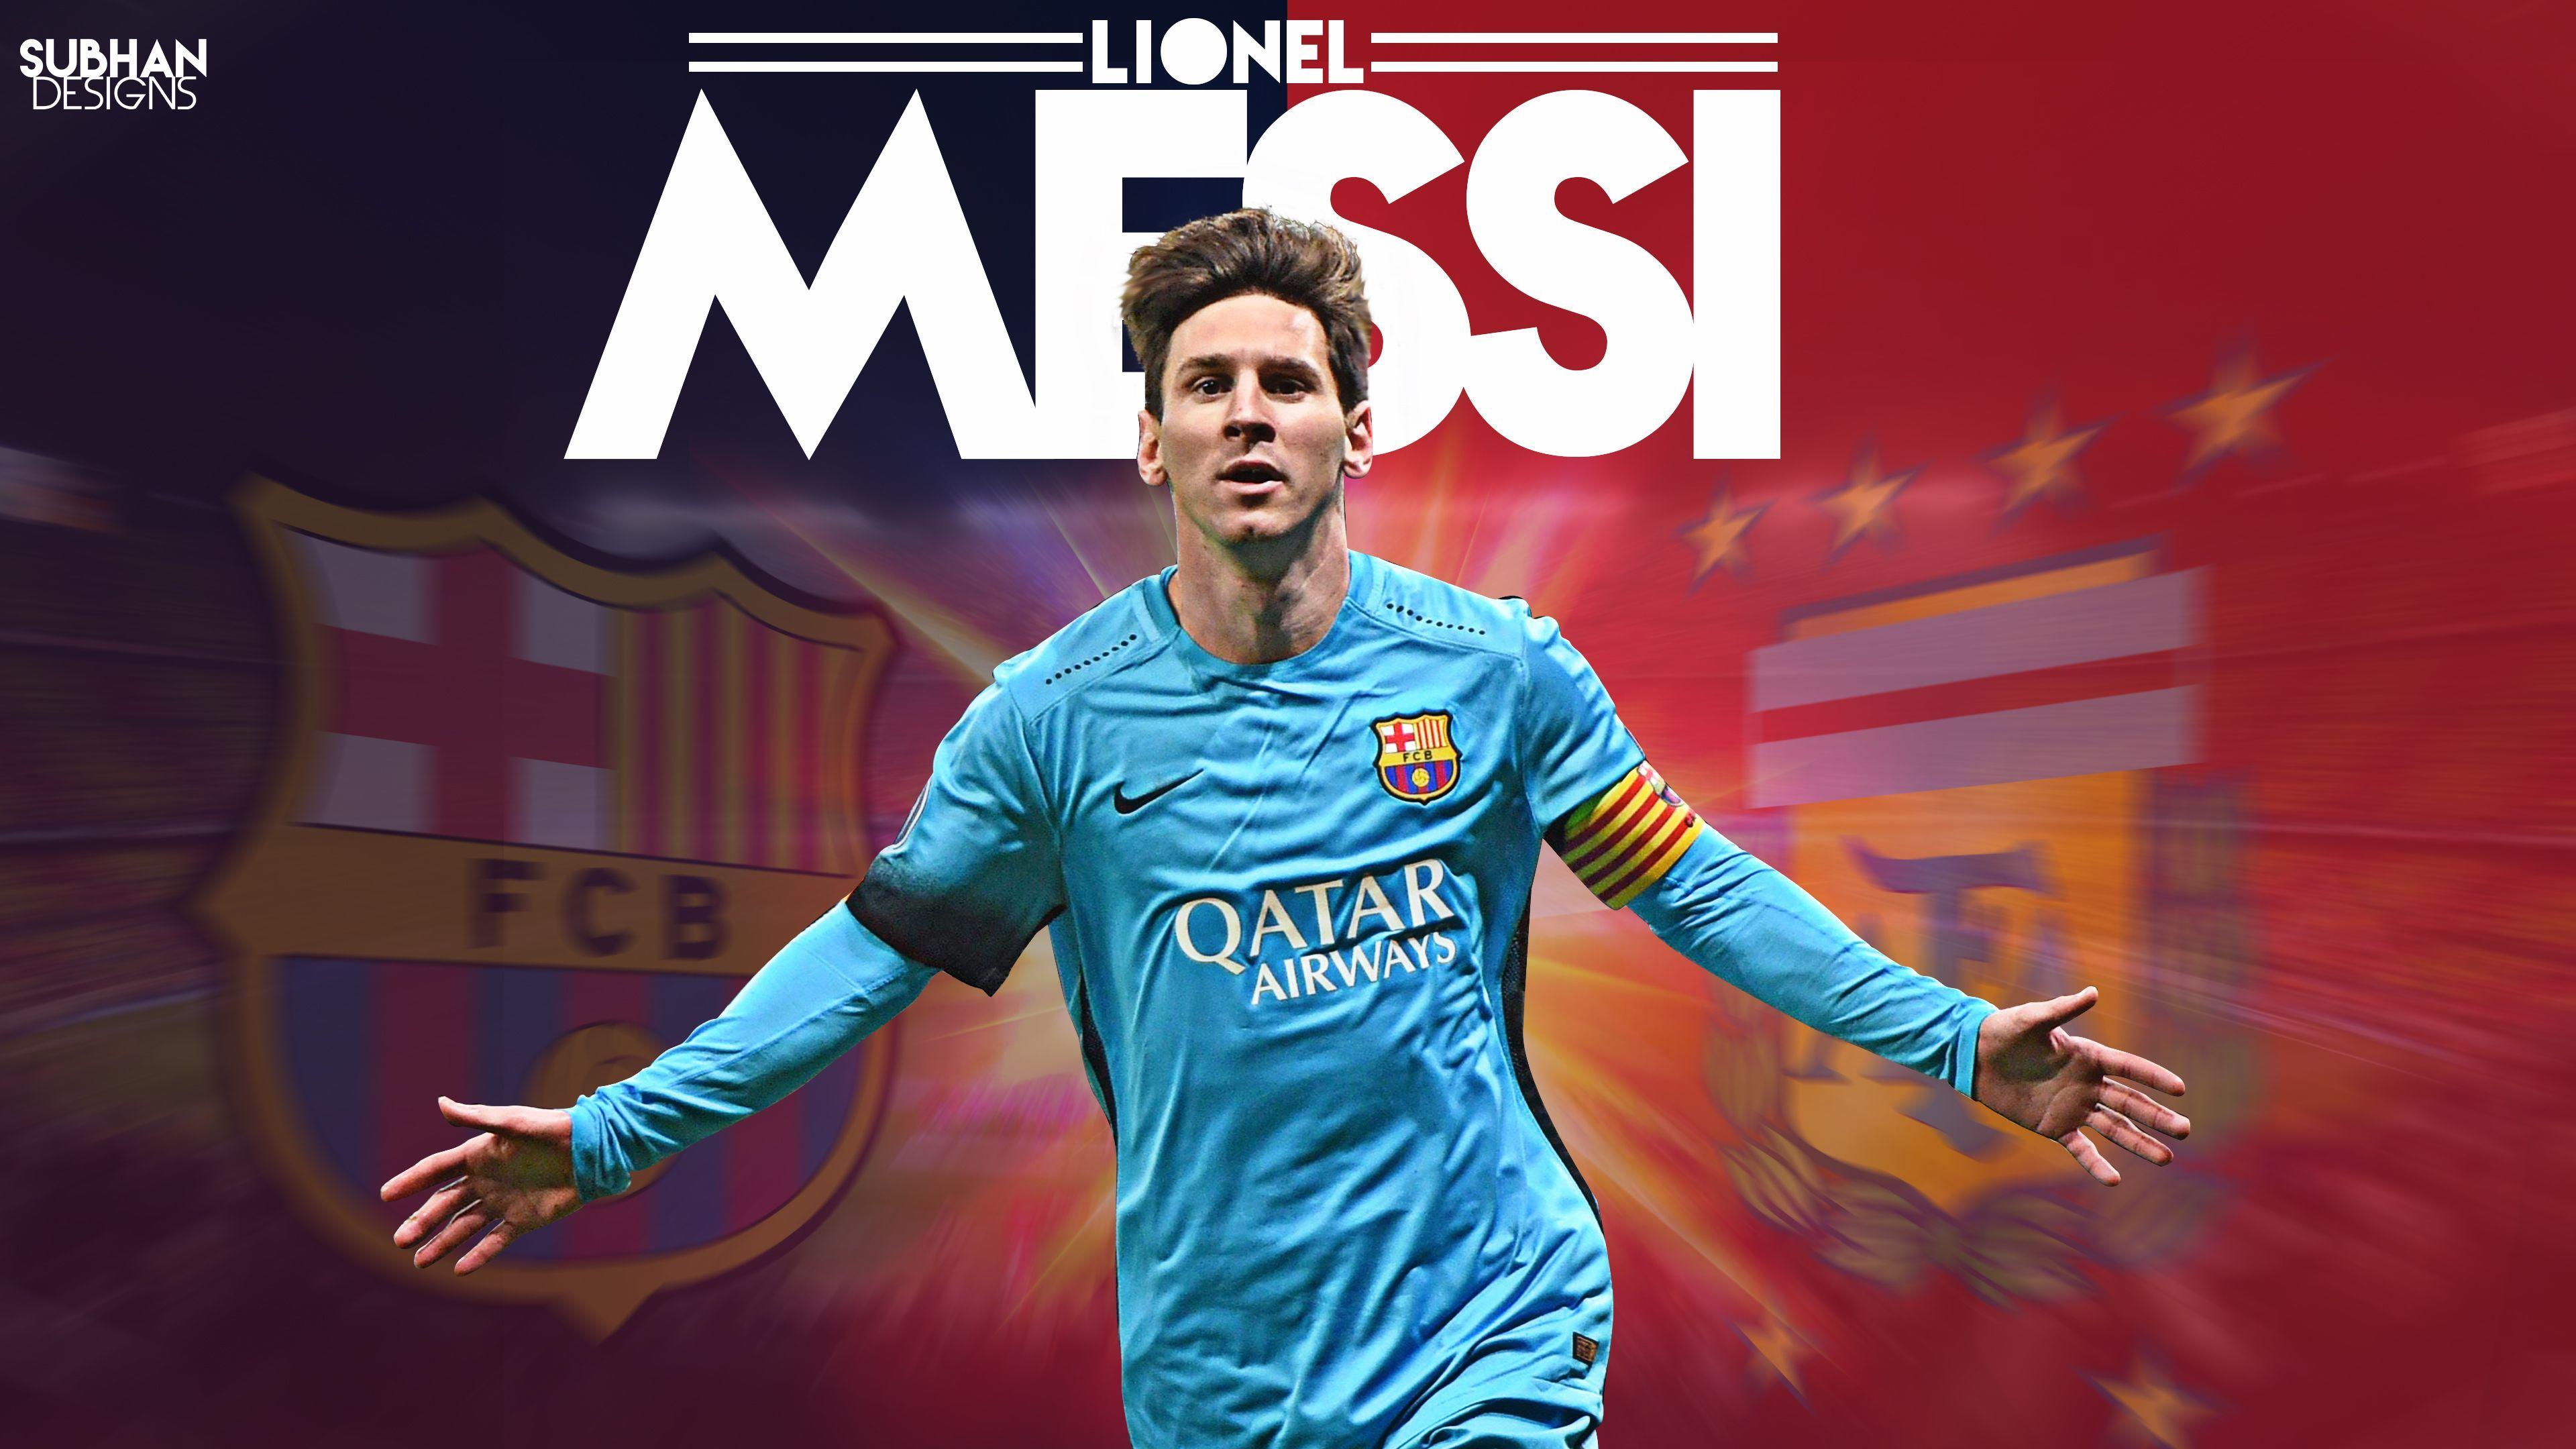 Lionel Messi 2016 wallpaper 4K